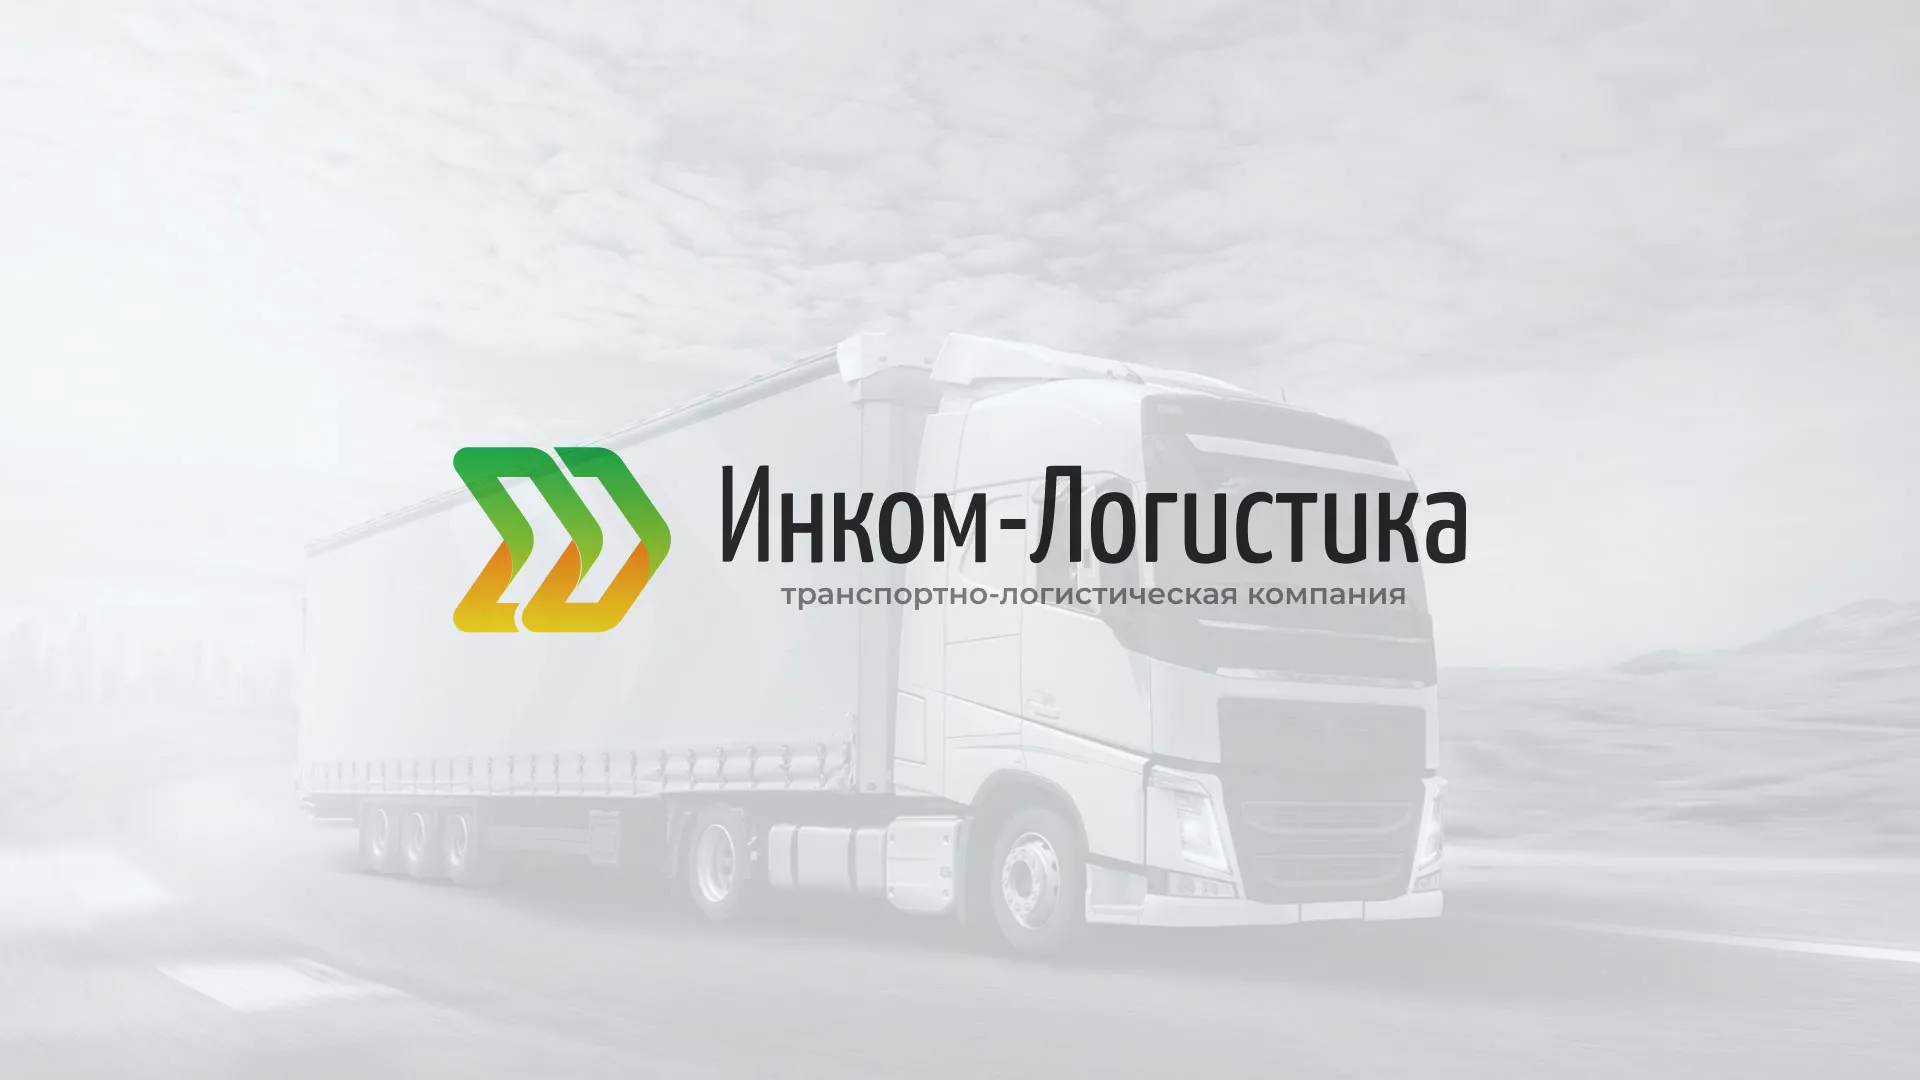 Разработка логотипа и сайта компании «Инком-Логистика» в Лихославле